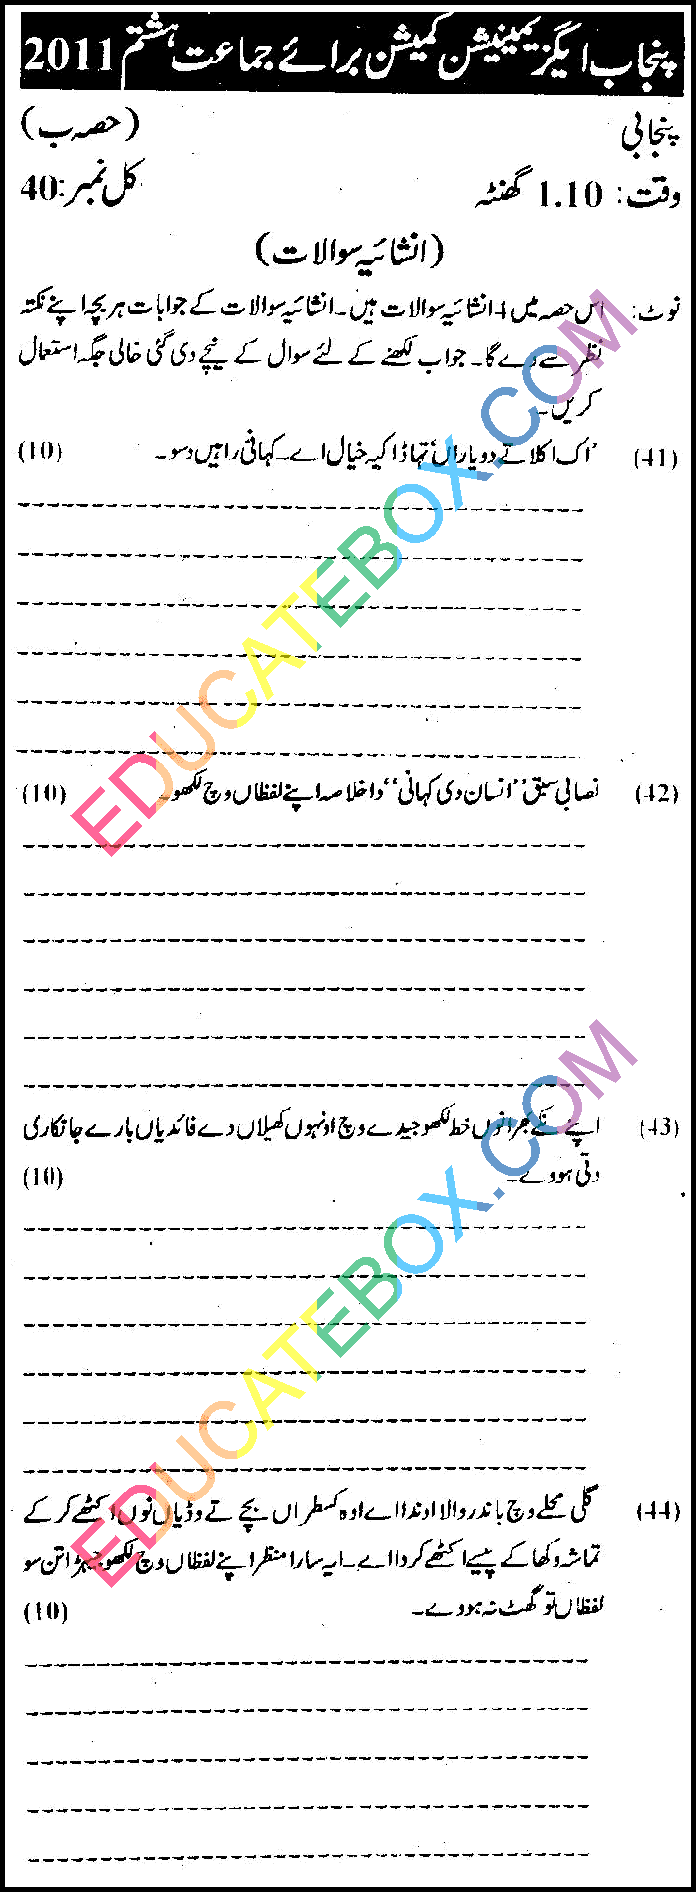 Past Paper 8th Class Punjabi Punjab Board (PEC) 2011 Subjective Type Page 4 - پیپر پنجابی 2011 جماعت ہشتم پنجاب بورڈ انشائیہ طرز ۔